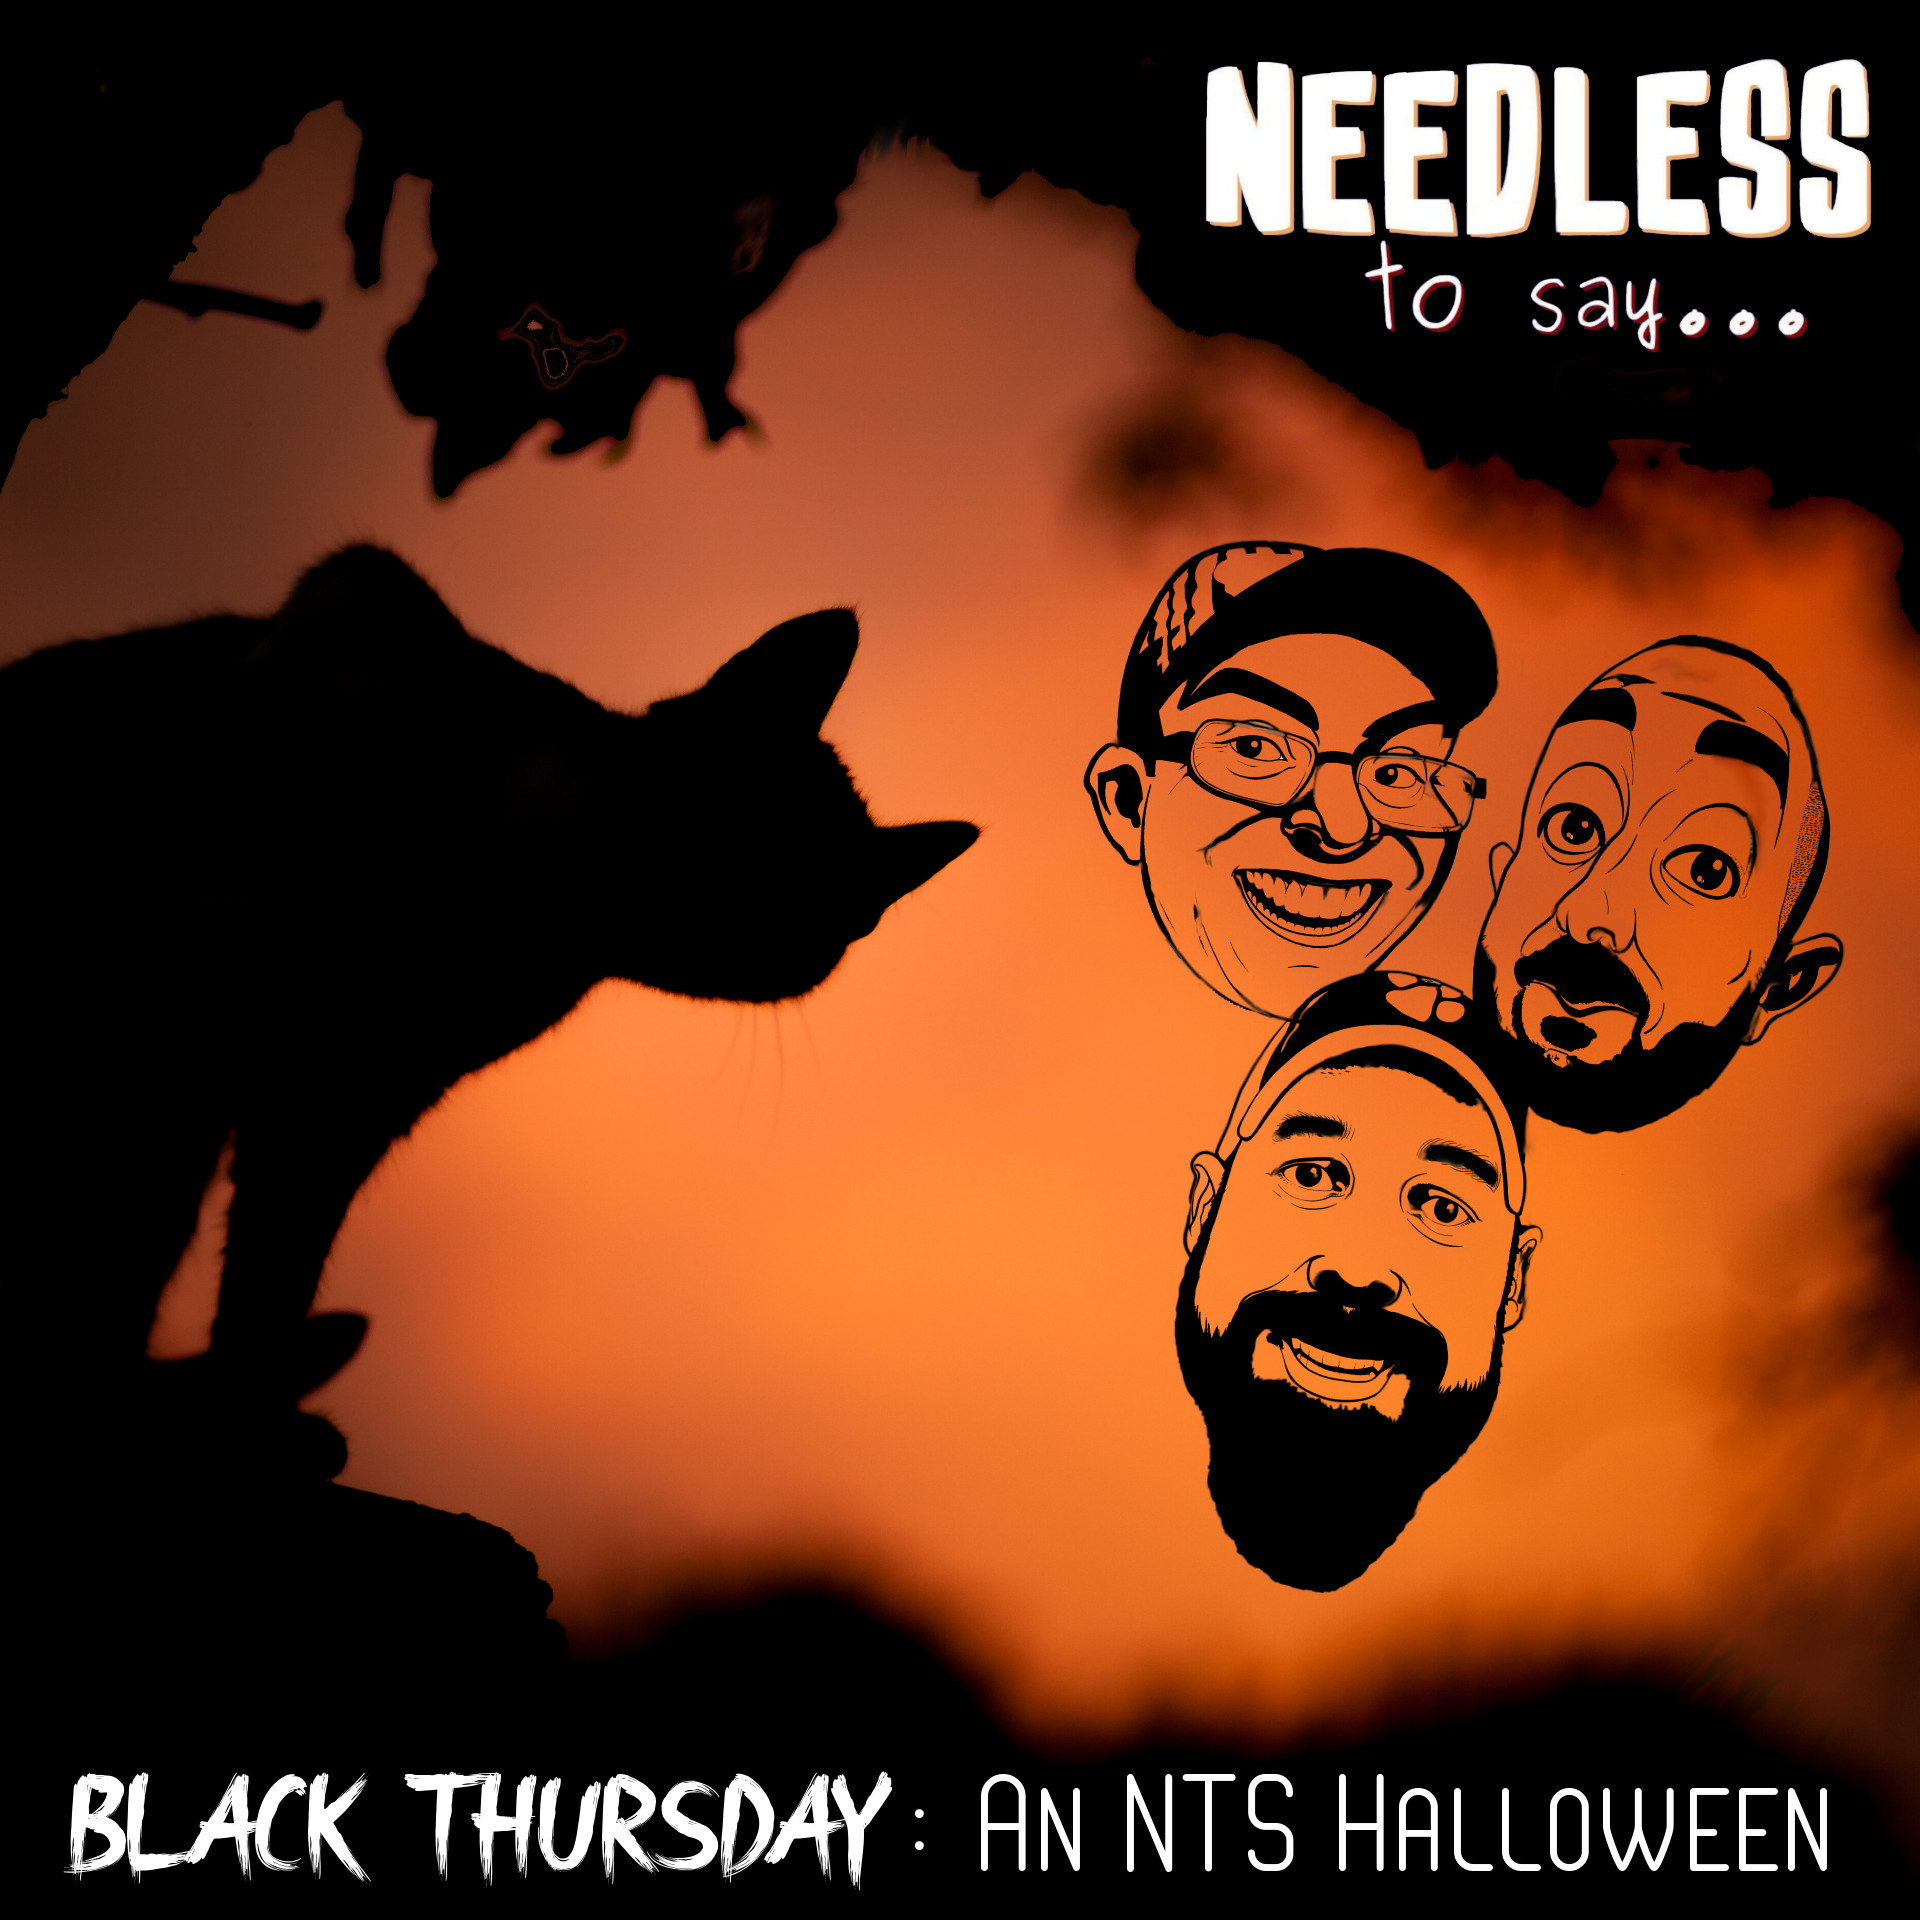 Black Thursday: An NTS Halloween Image